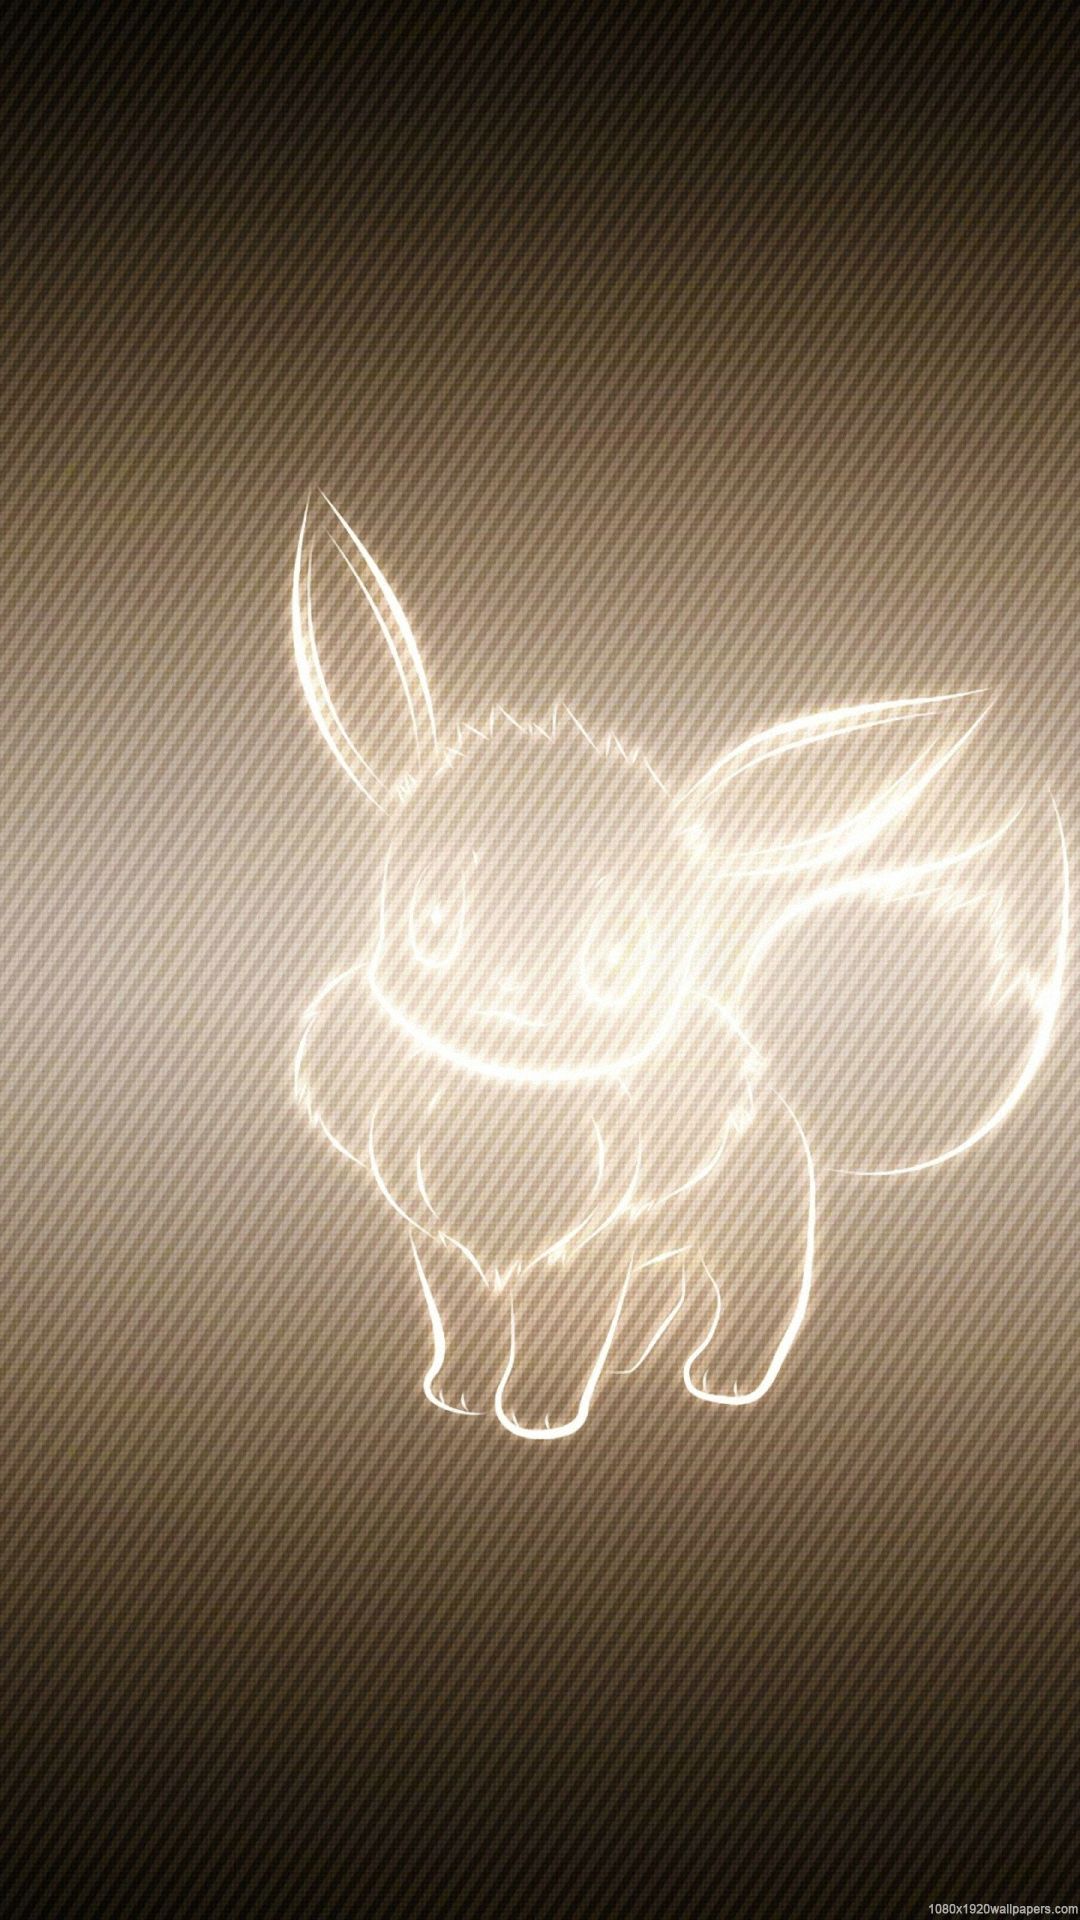 1080x1920 Animal Pokemon Eevee Wallpaper Hd